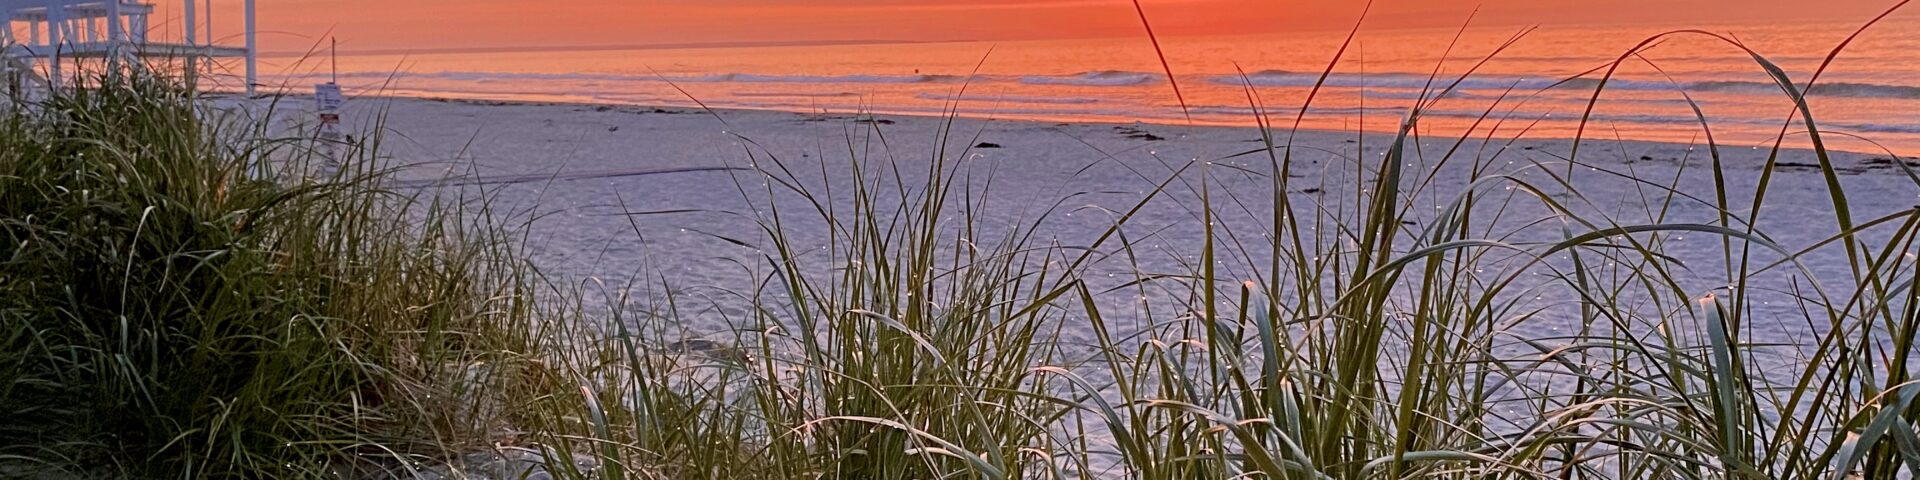 Ogunquit beach, sea grass, red sunrise